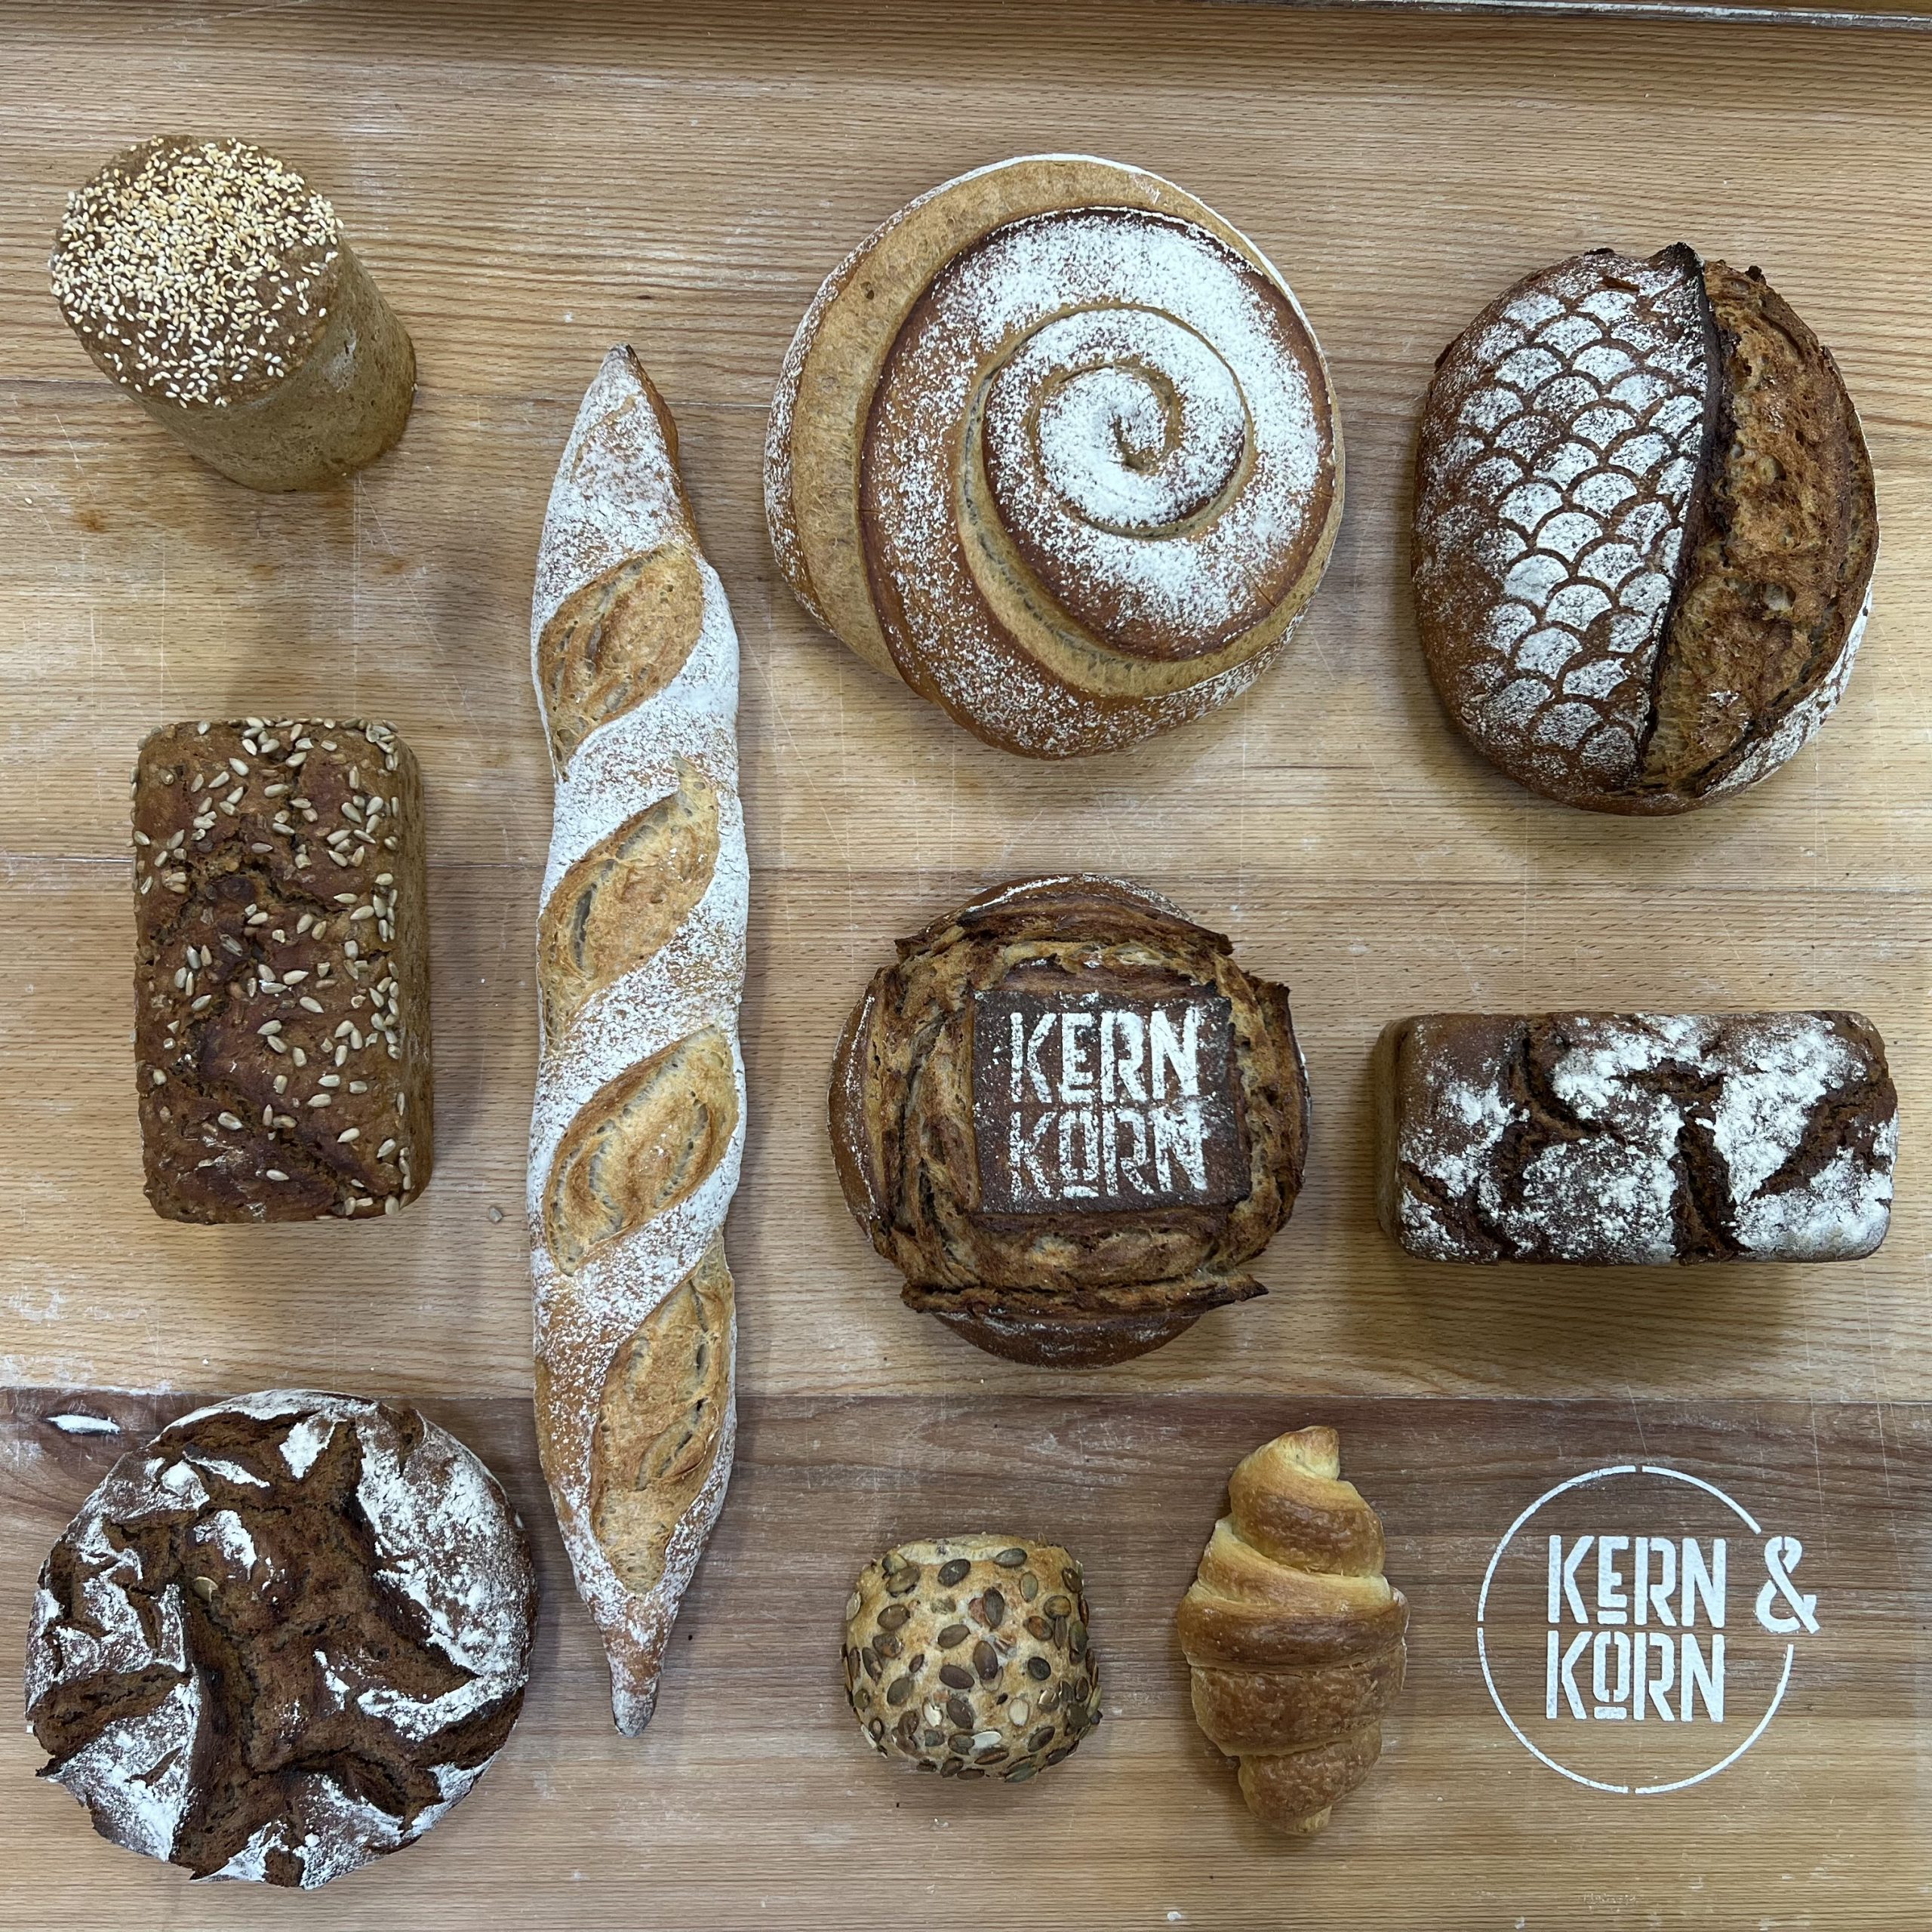 Kern & Korn Brot